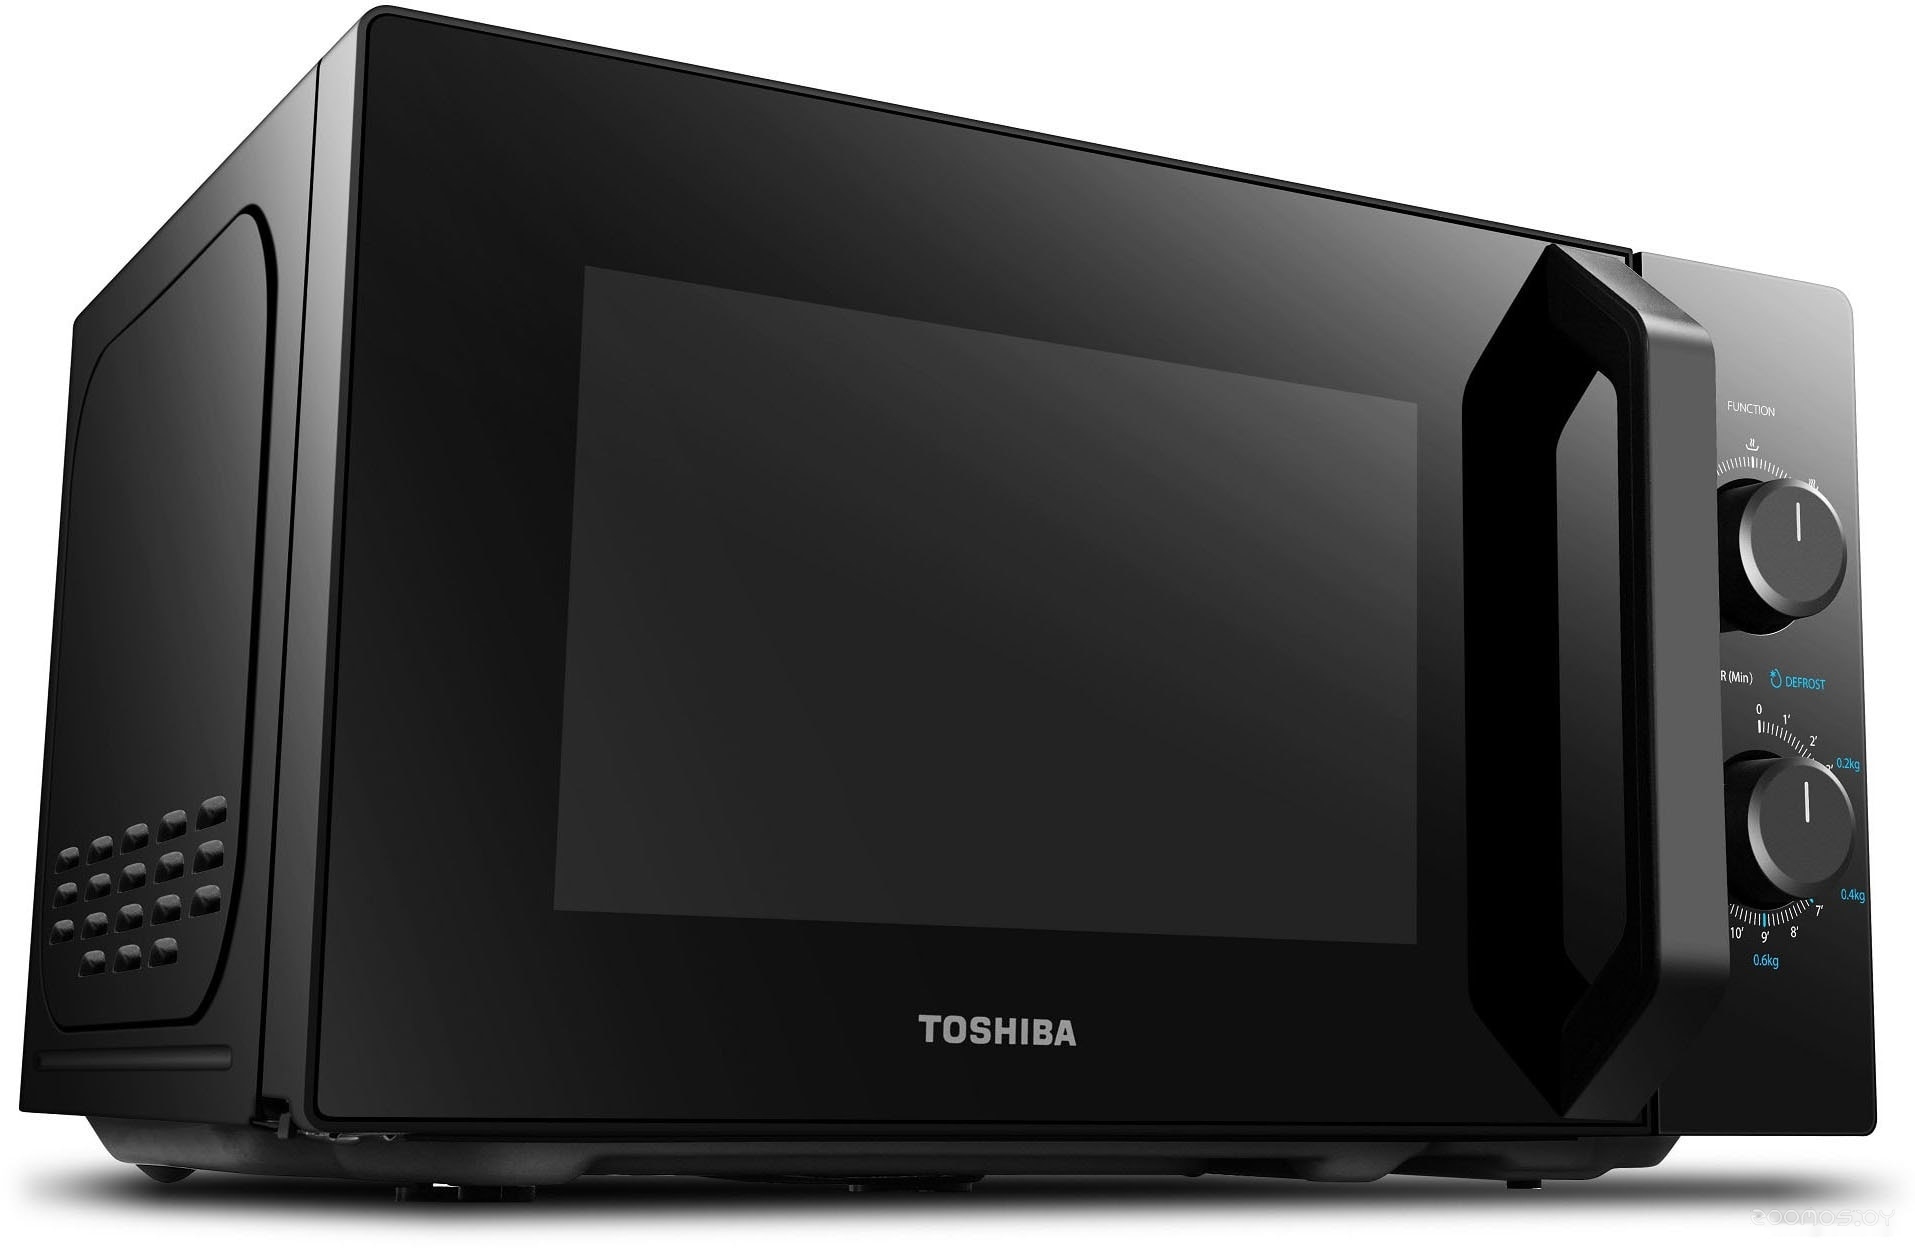   Toshiba MW-MM20P ()     